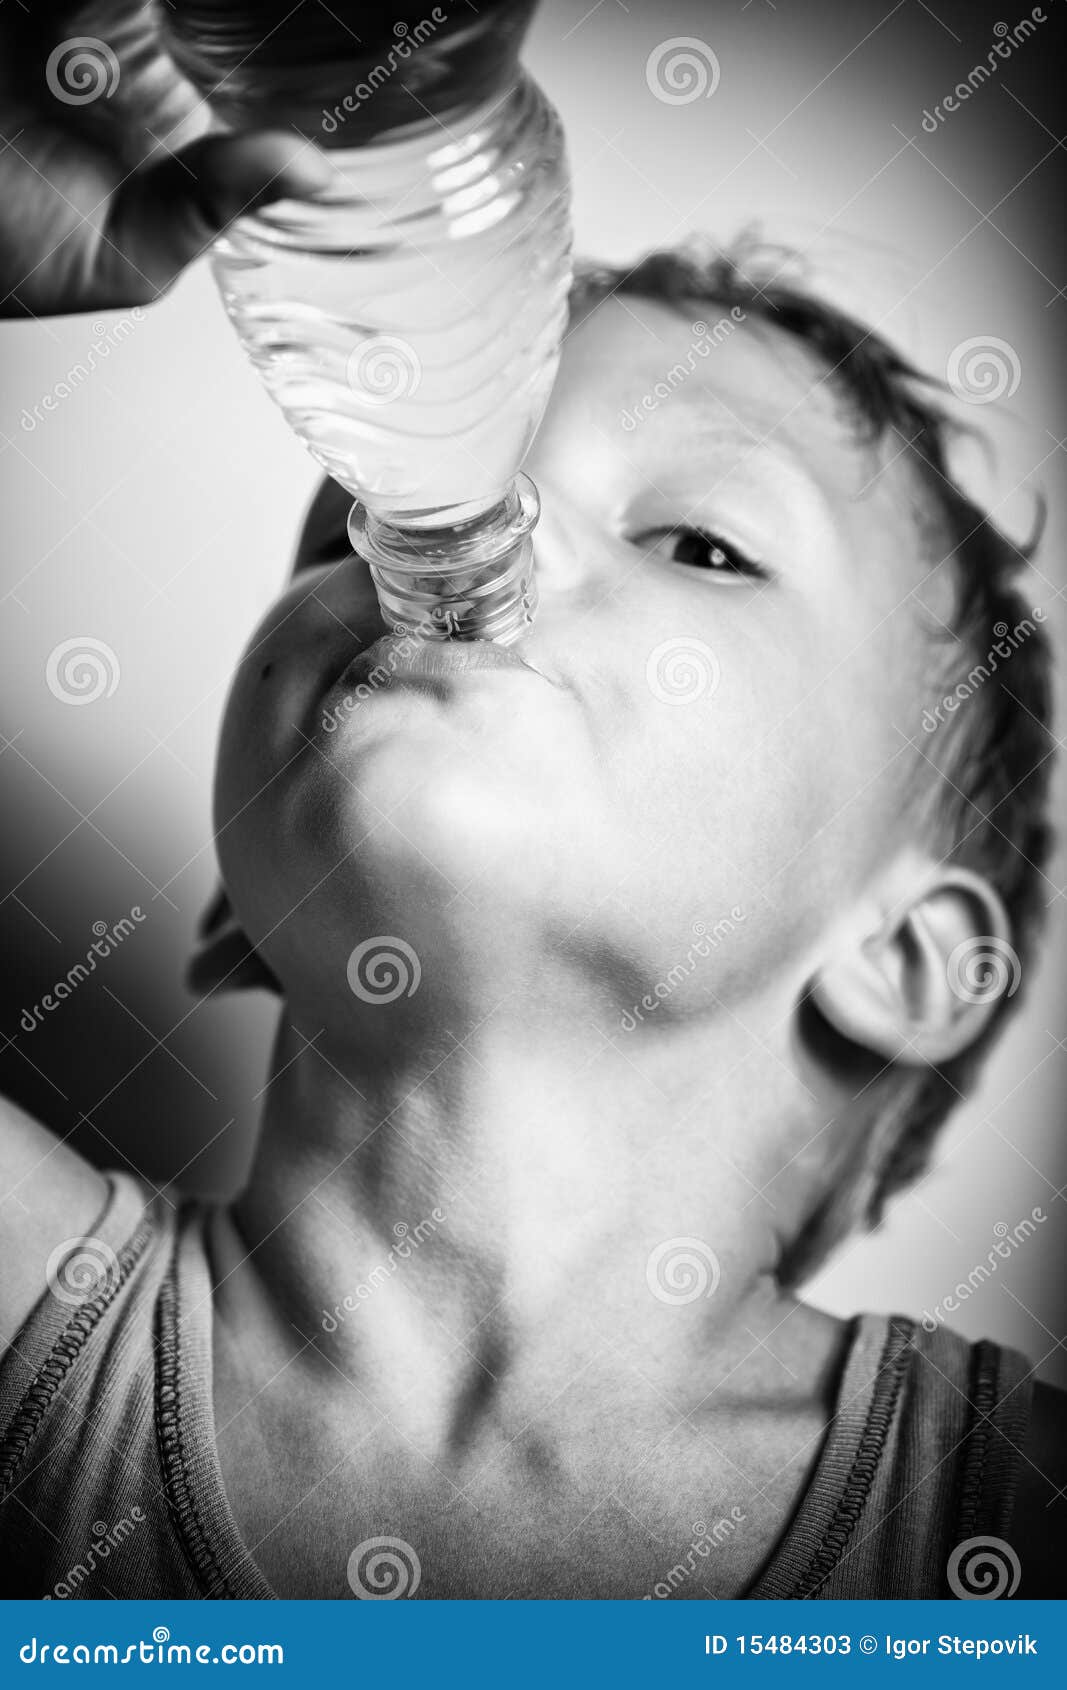 Teen boy drinking water Stock Photo by ©VaLiza 114884958